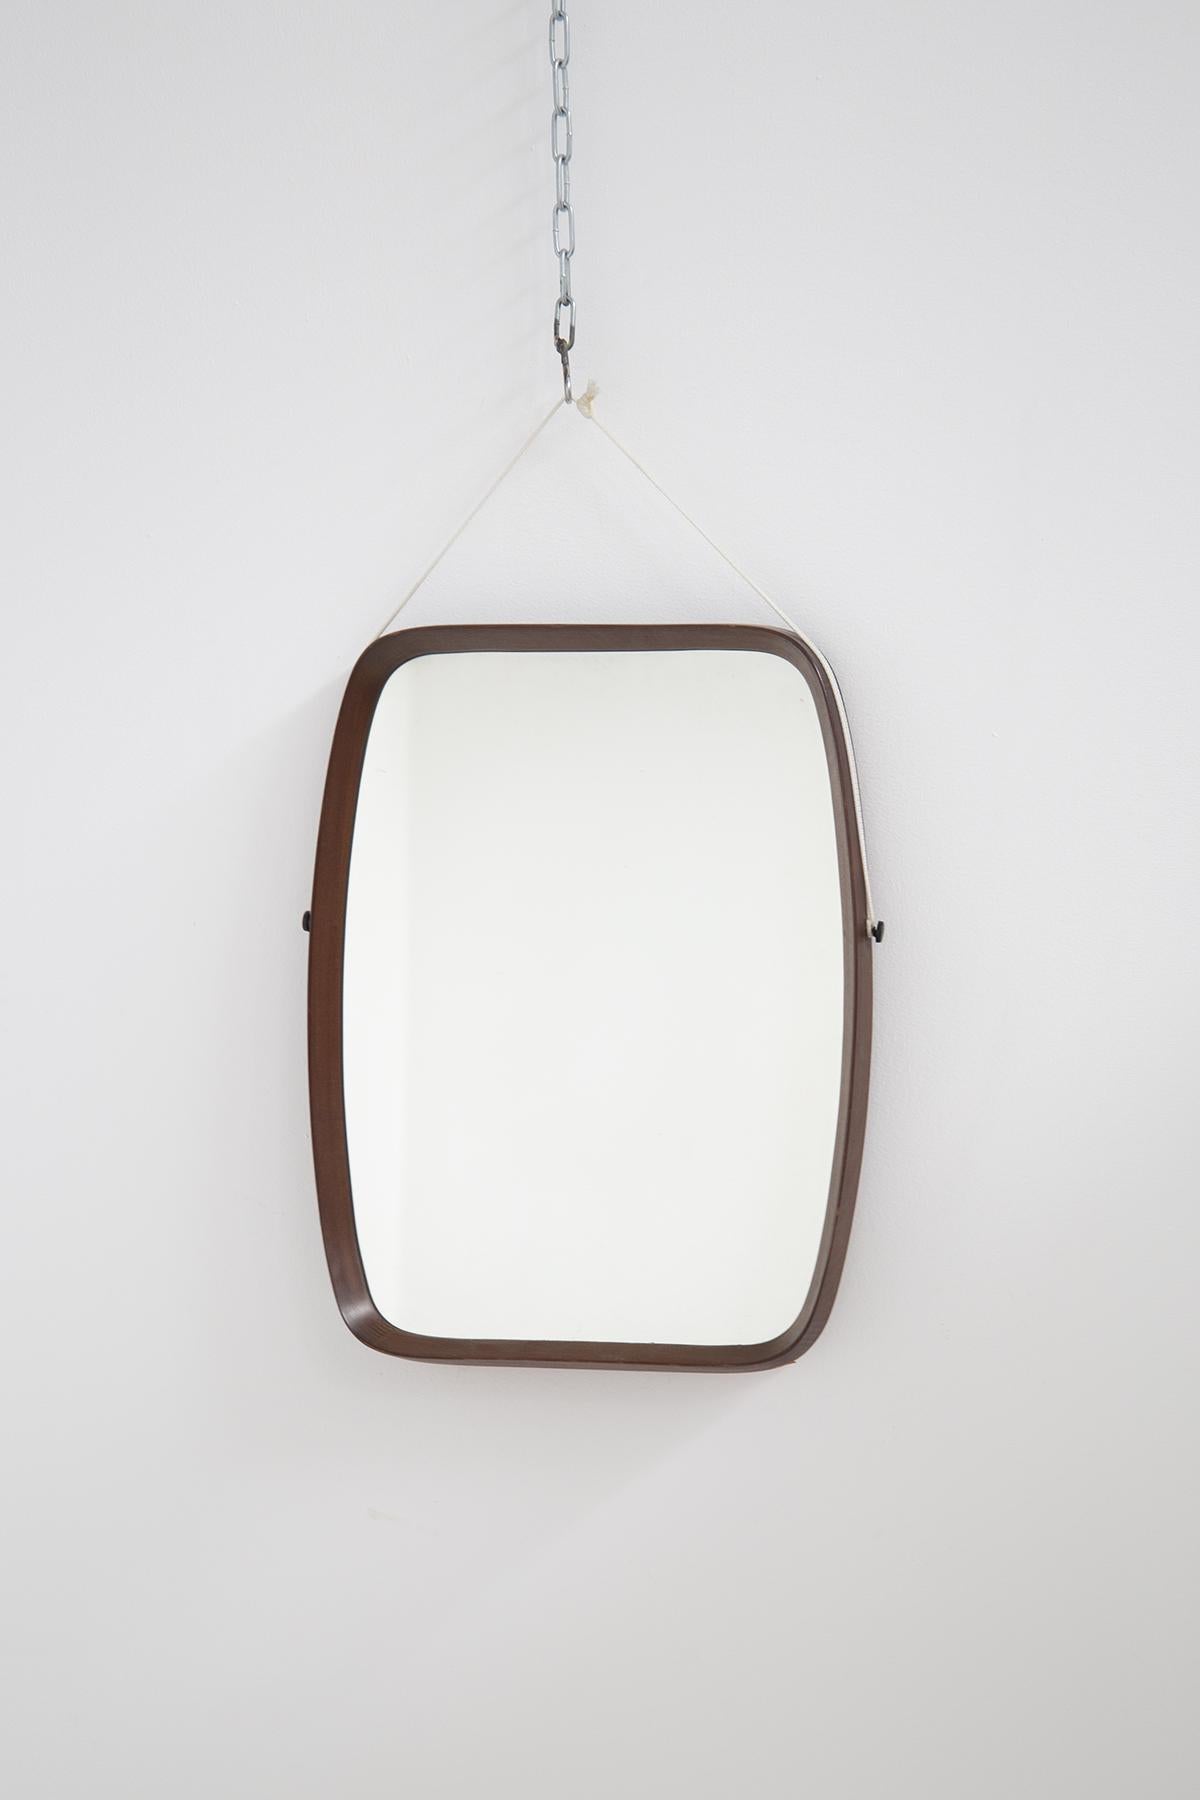 Italian Rectangular Wall Mirror in Wood by Franco Campo and Carlo Graffi